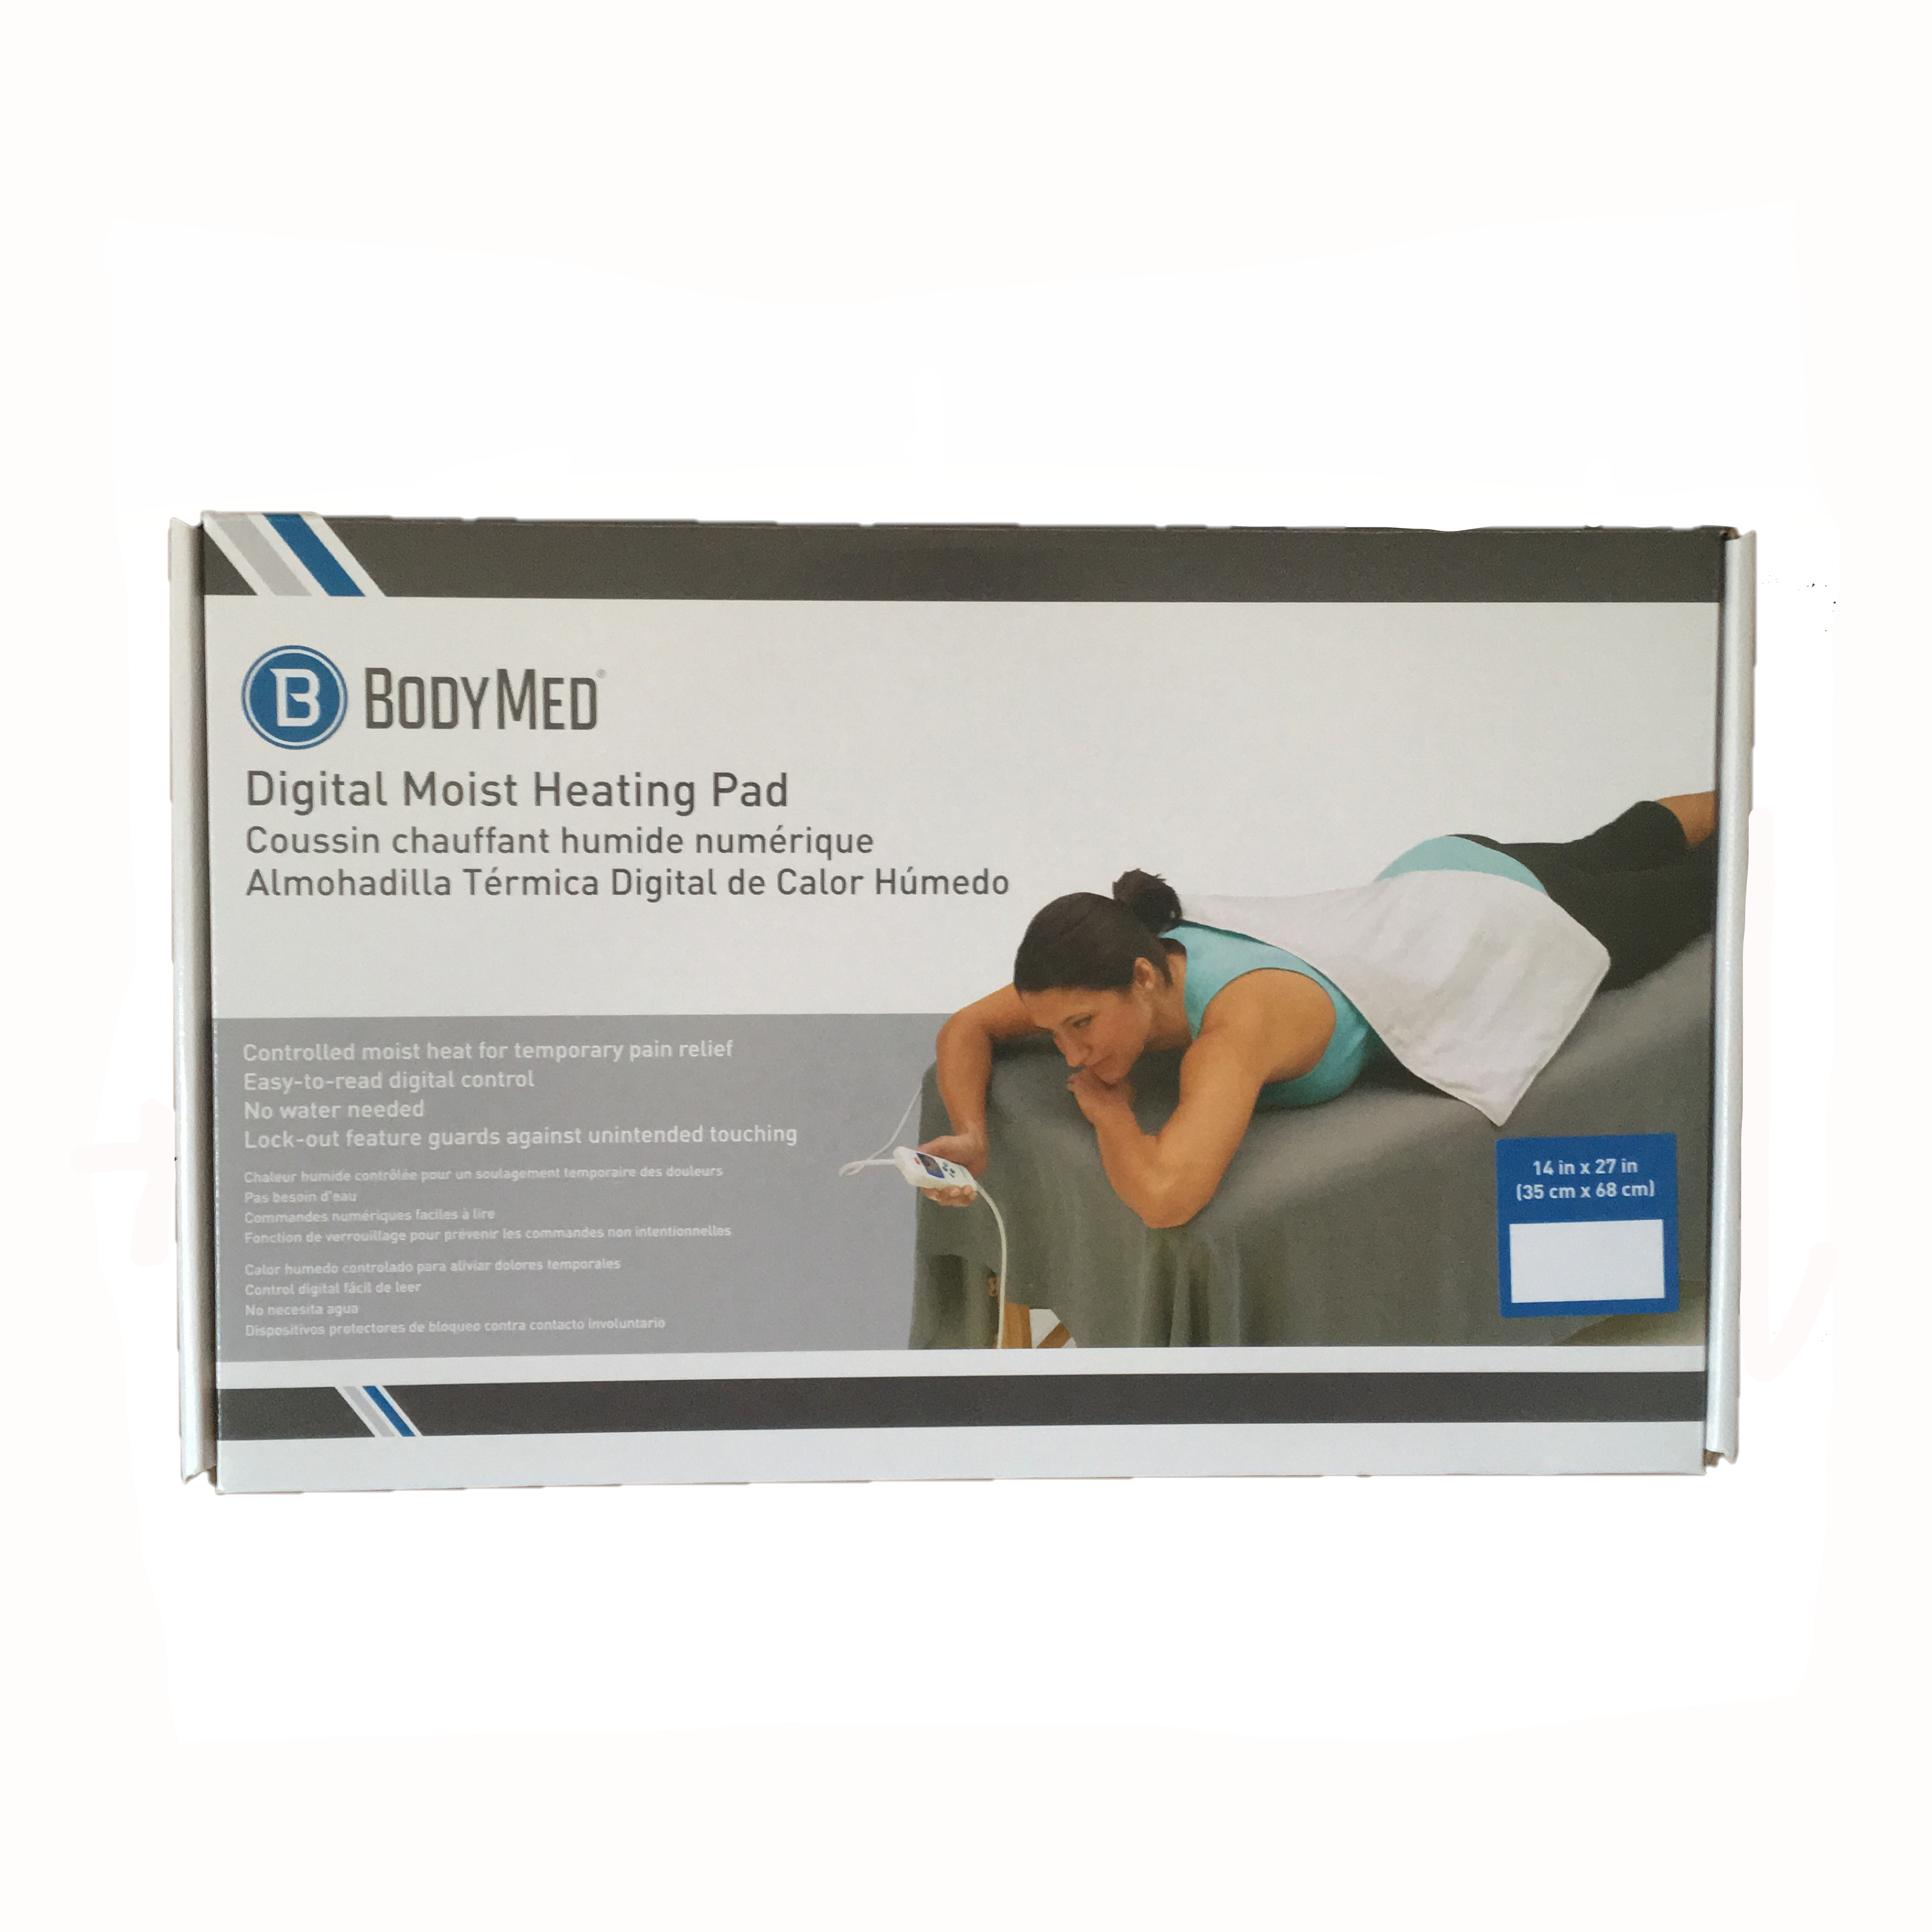 bodymed digital moist heating pad instructions